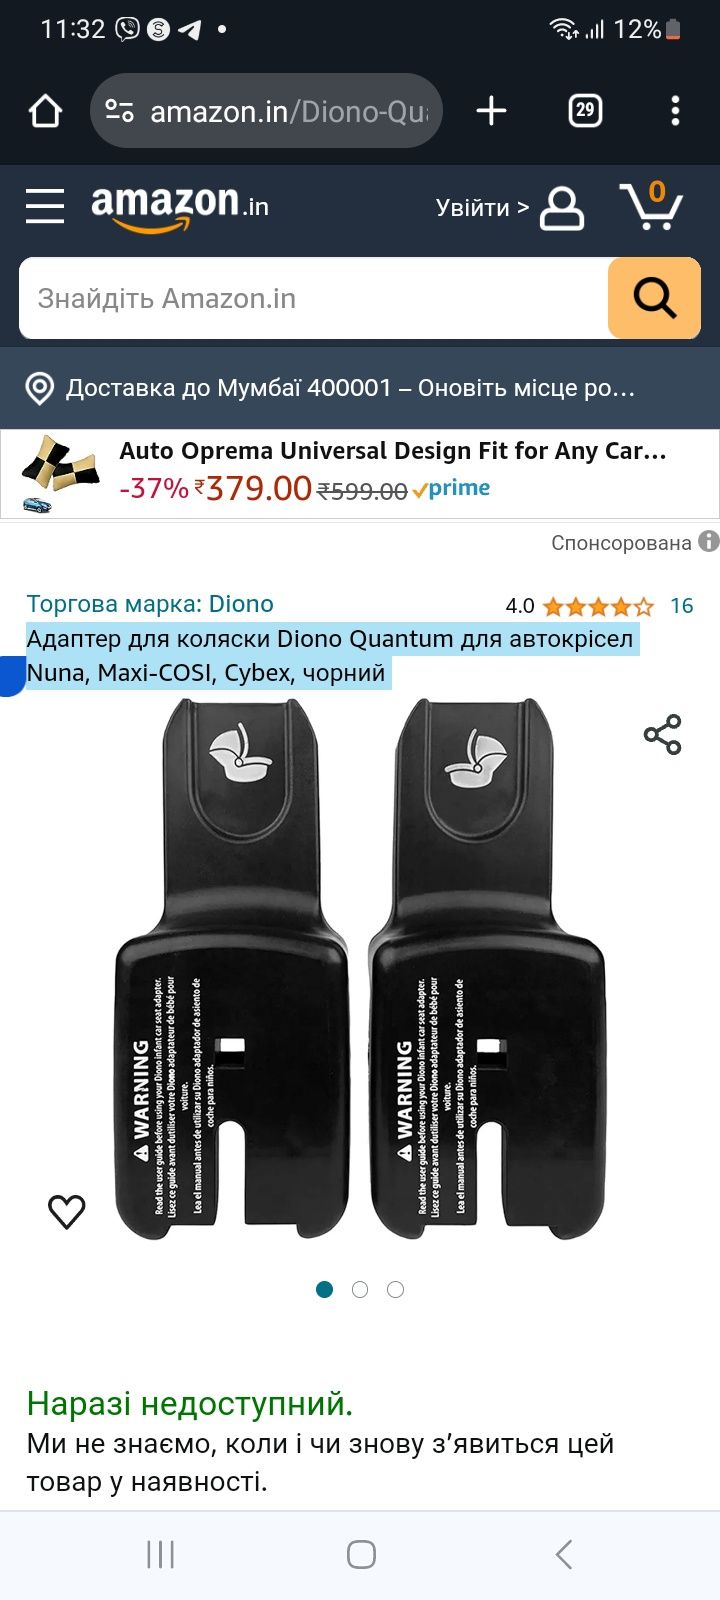 Адаптер для коляски Diono Quantum, автокрісел Nuna, Maxi-COSI, Cybex